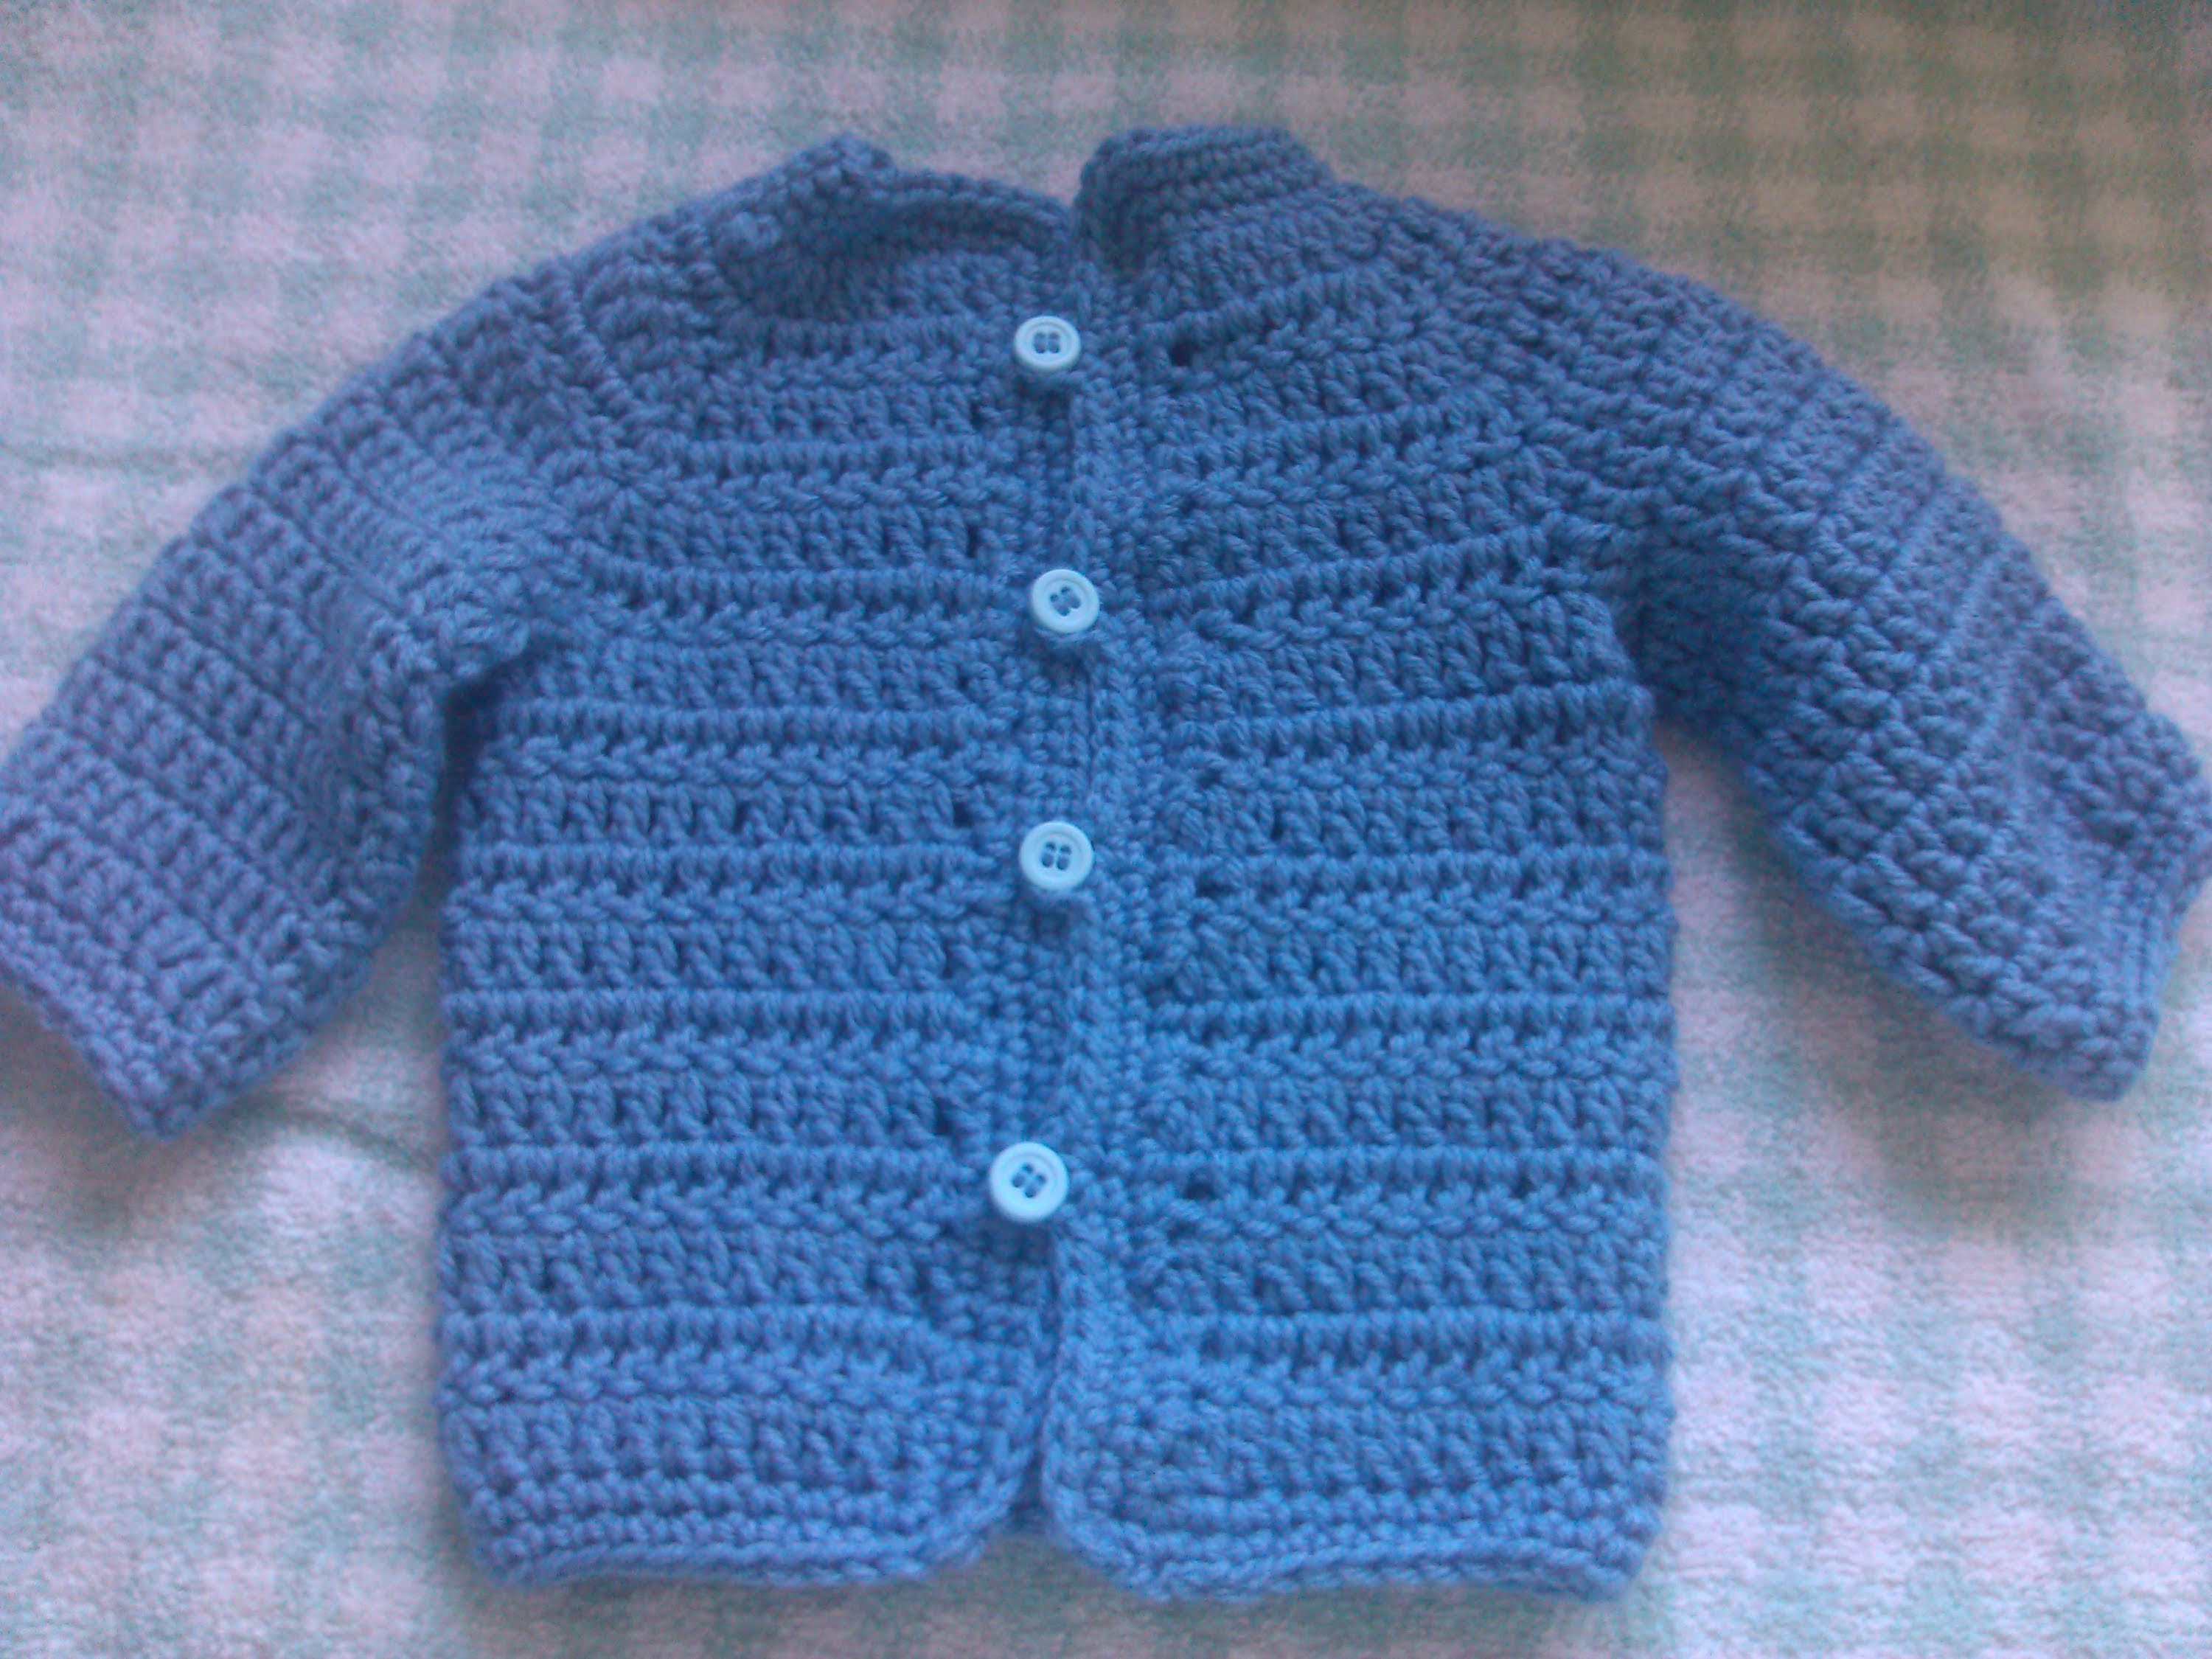 Easy to crochet baby cardigan (video 2). baby sweater chambrita en crochet